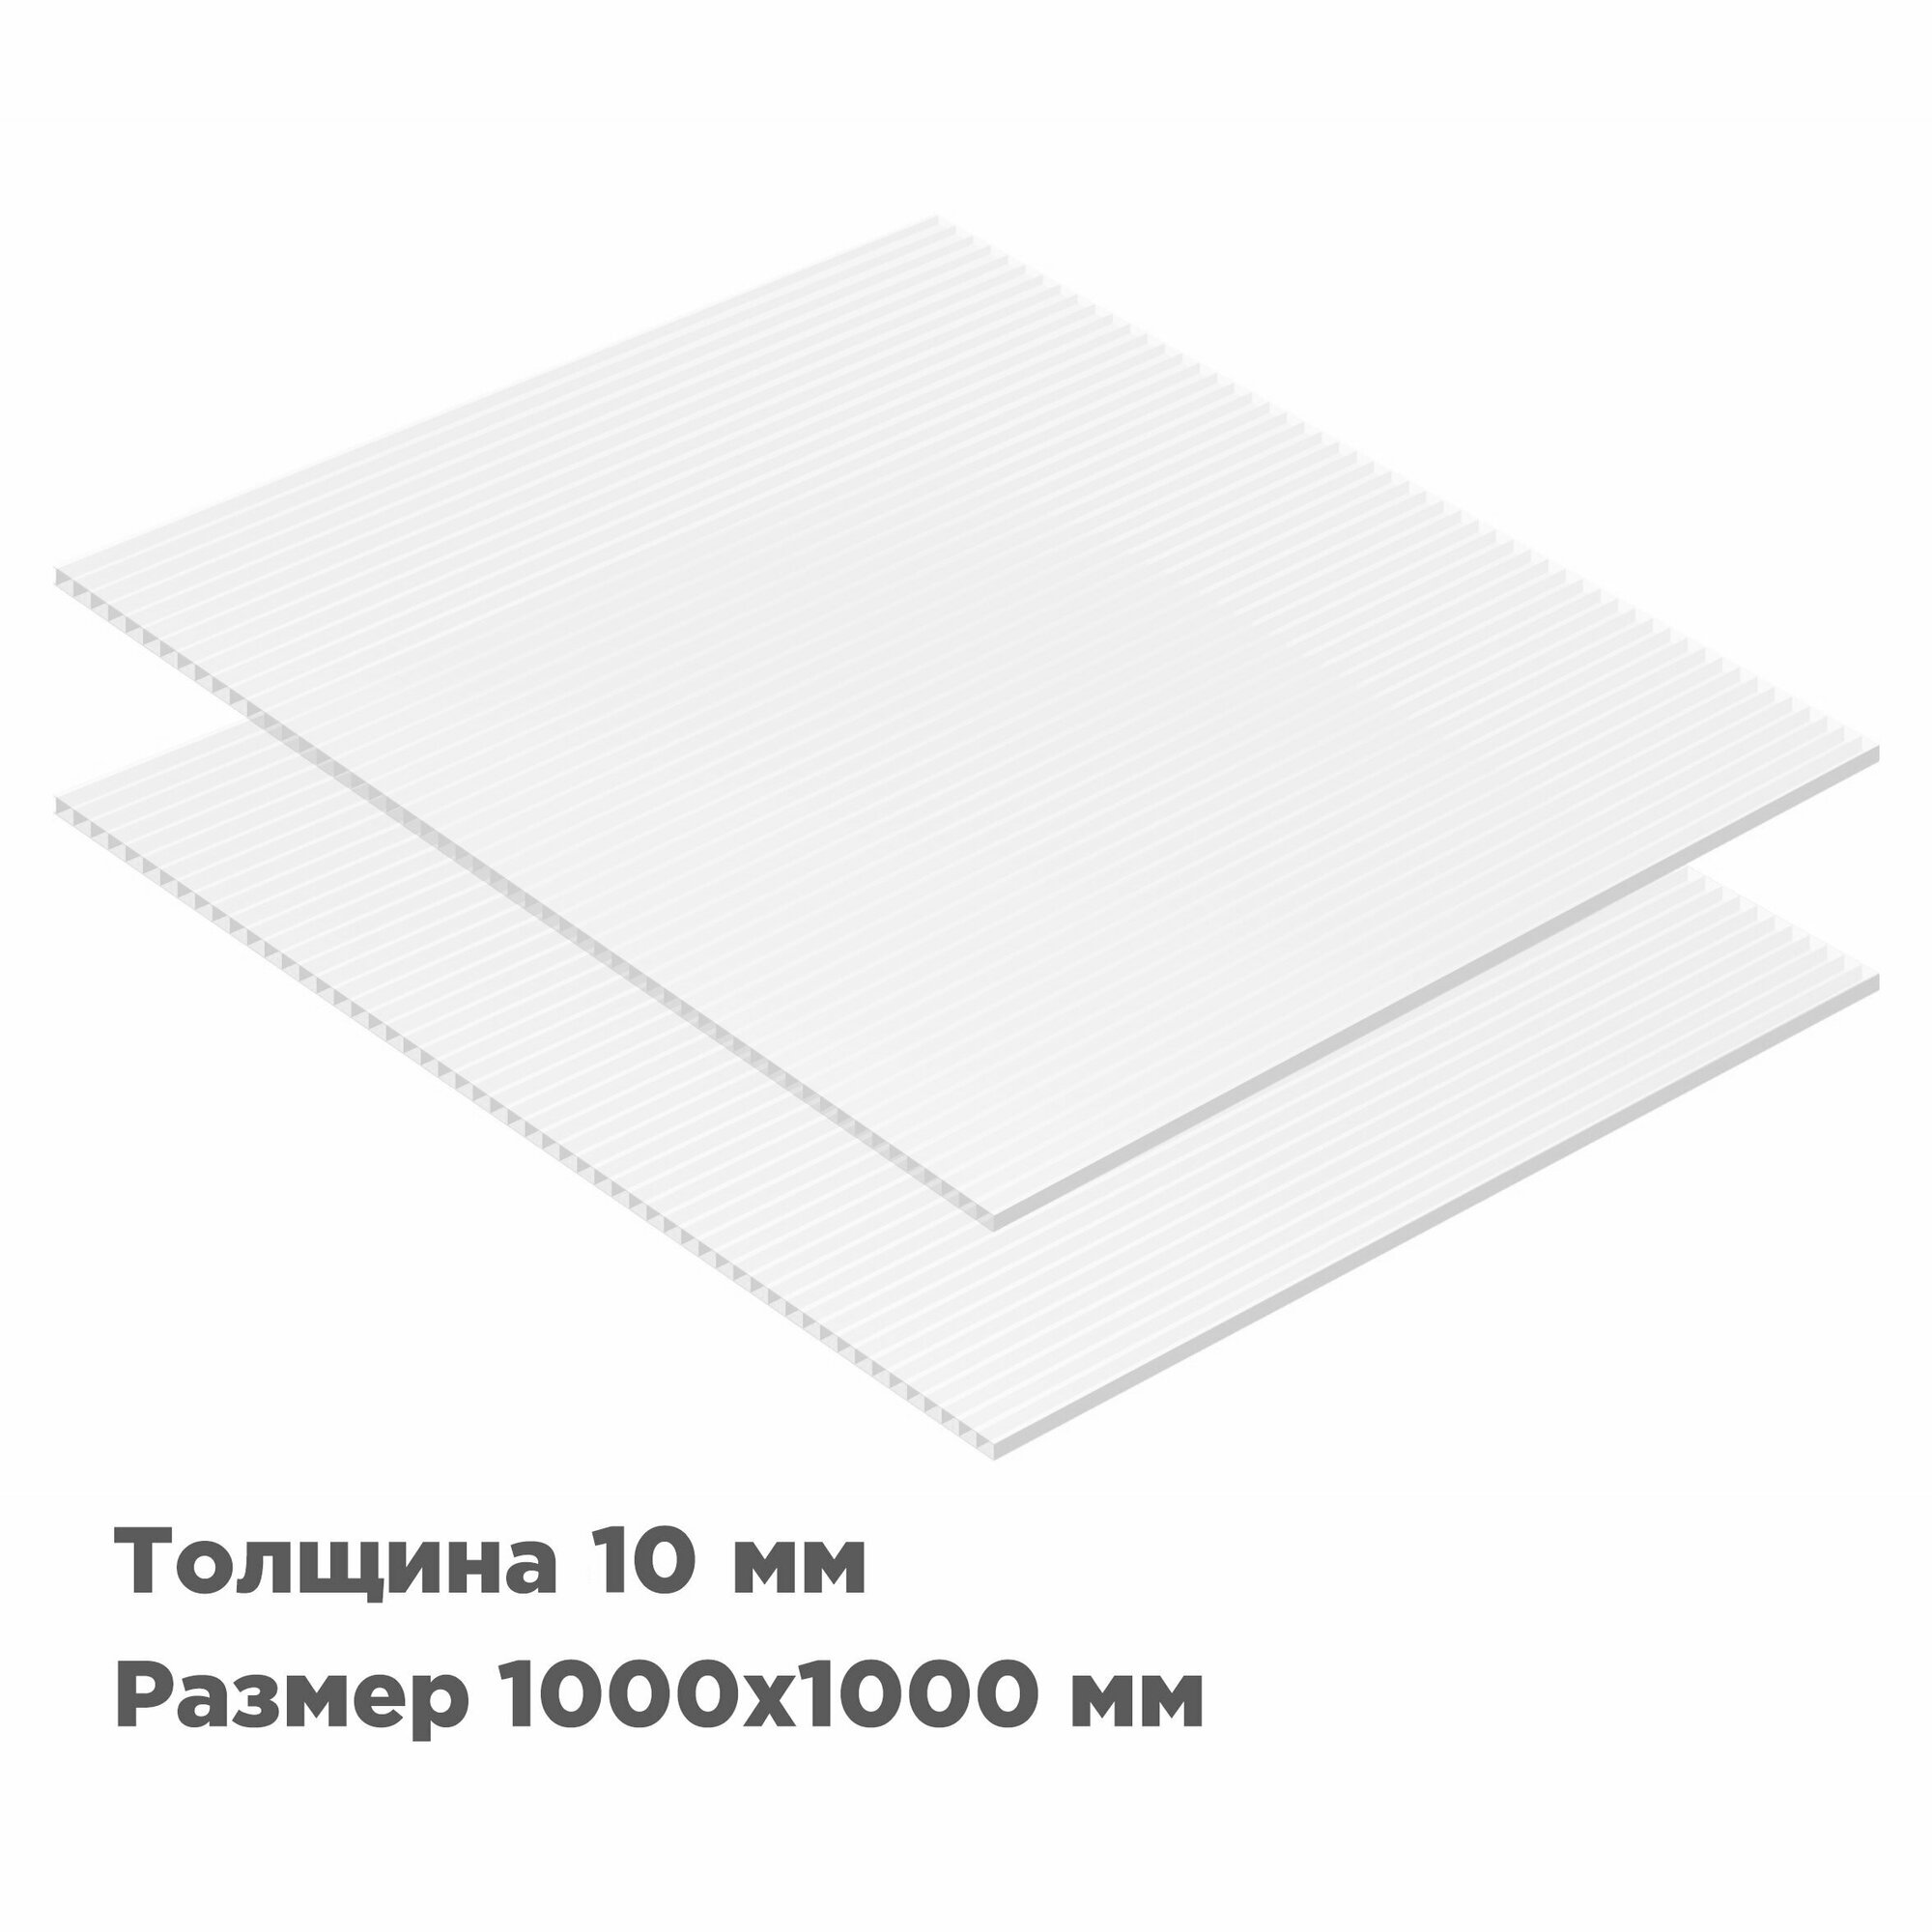 Сотовый поликарбонат Novattro 10мм, 1000x1000мм, белый, 2 листа